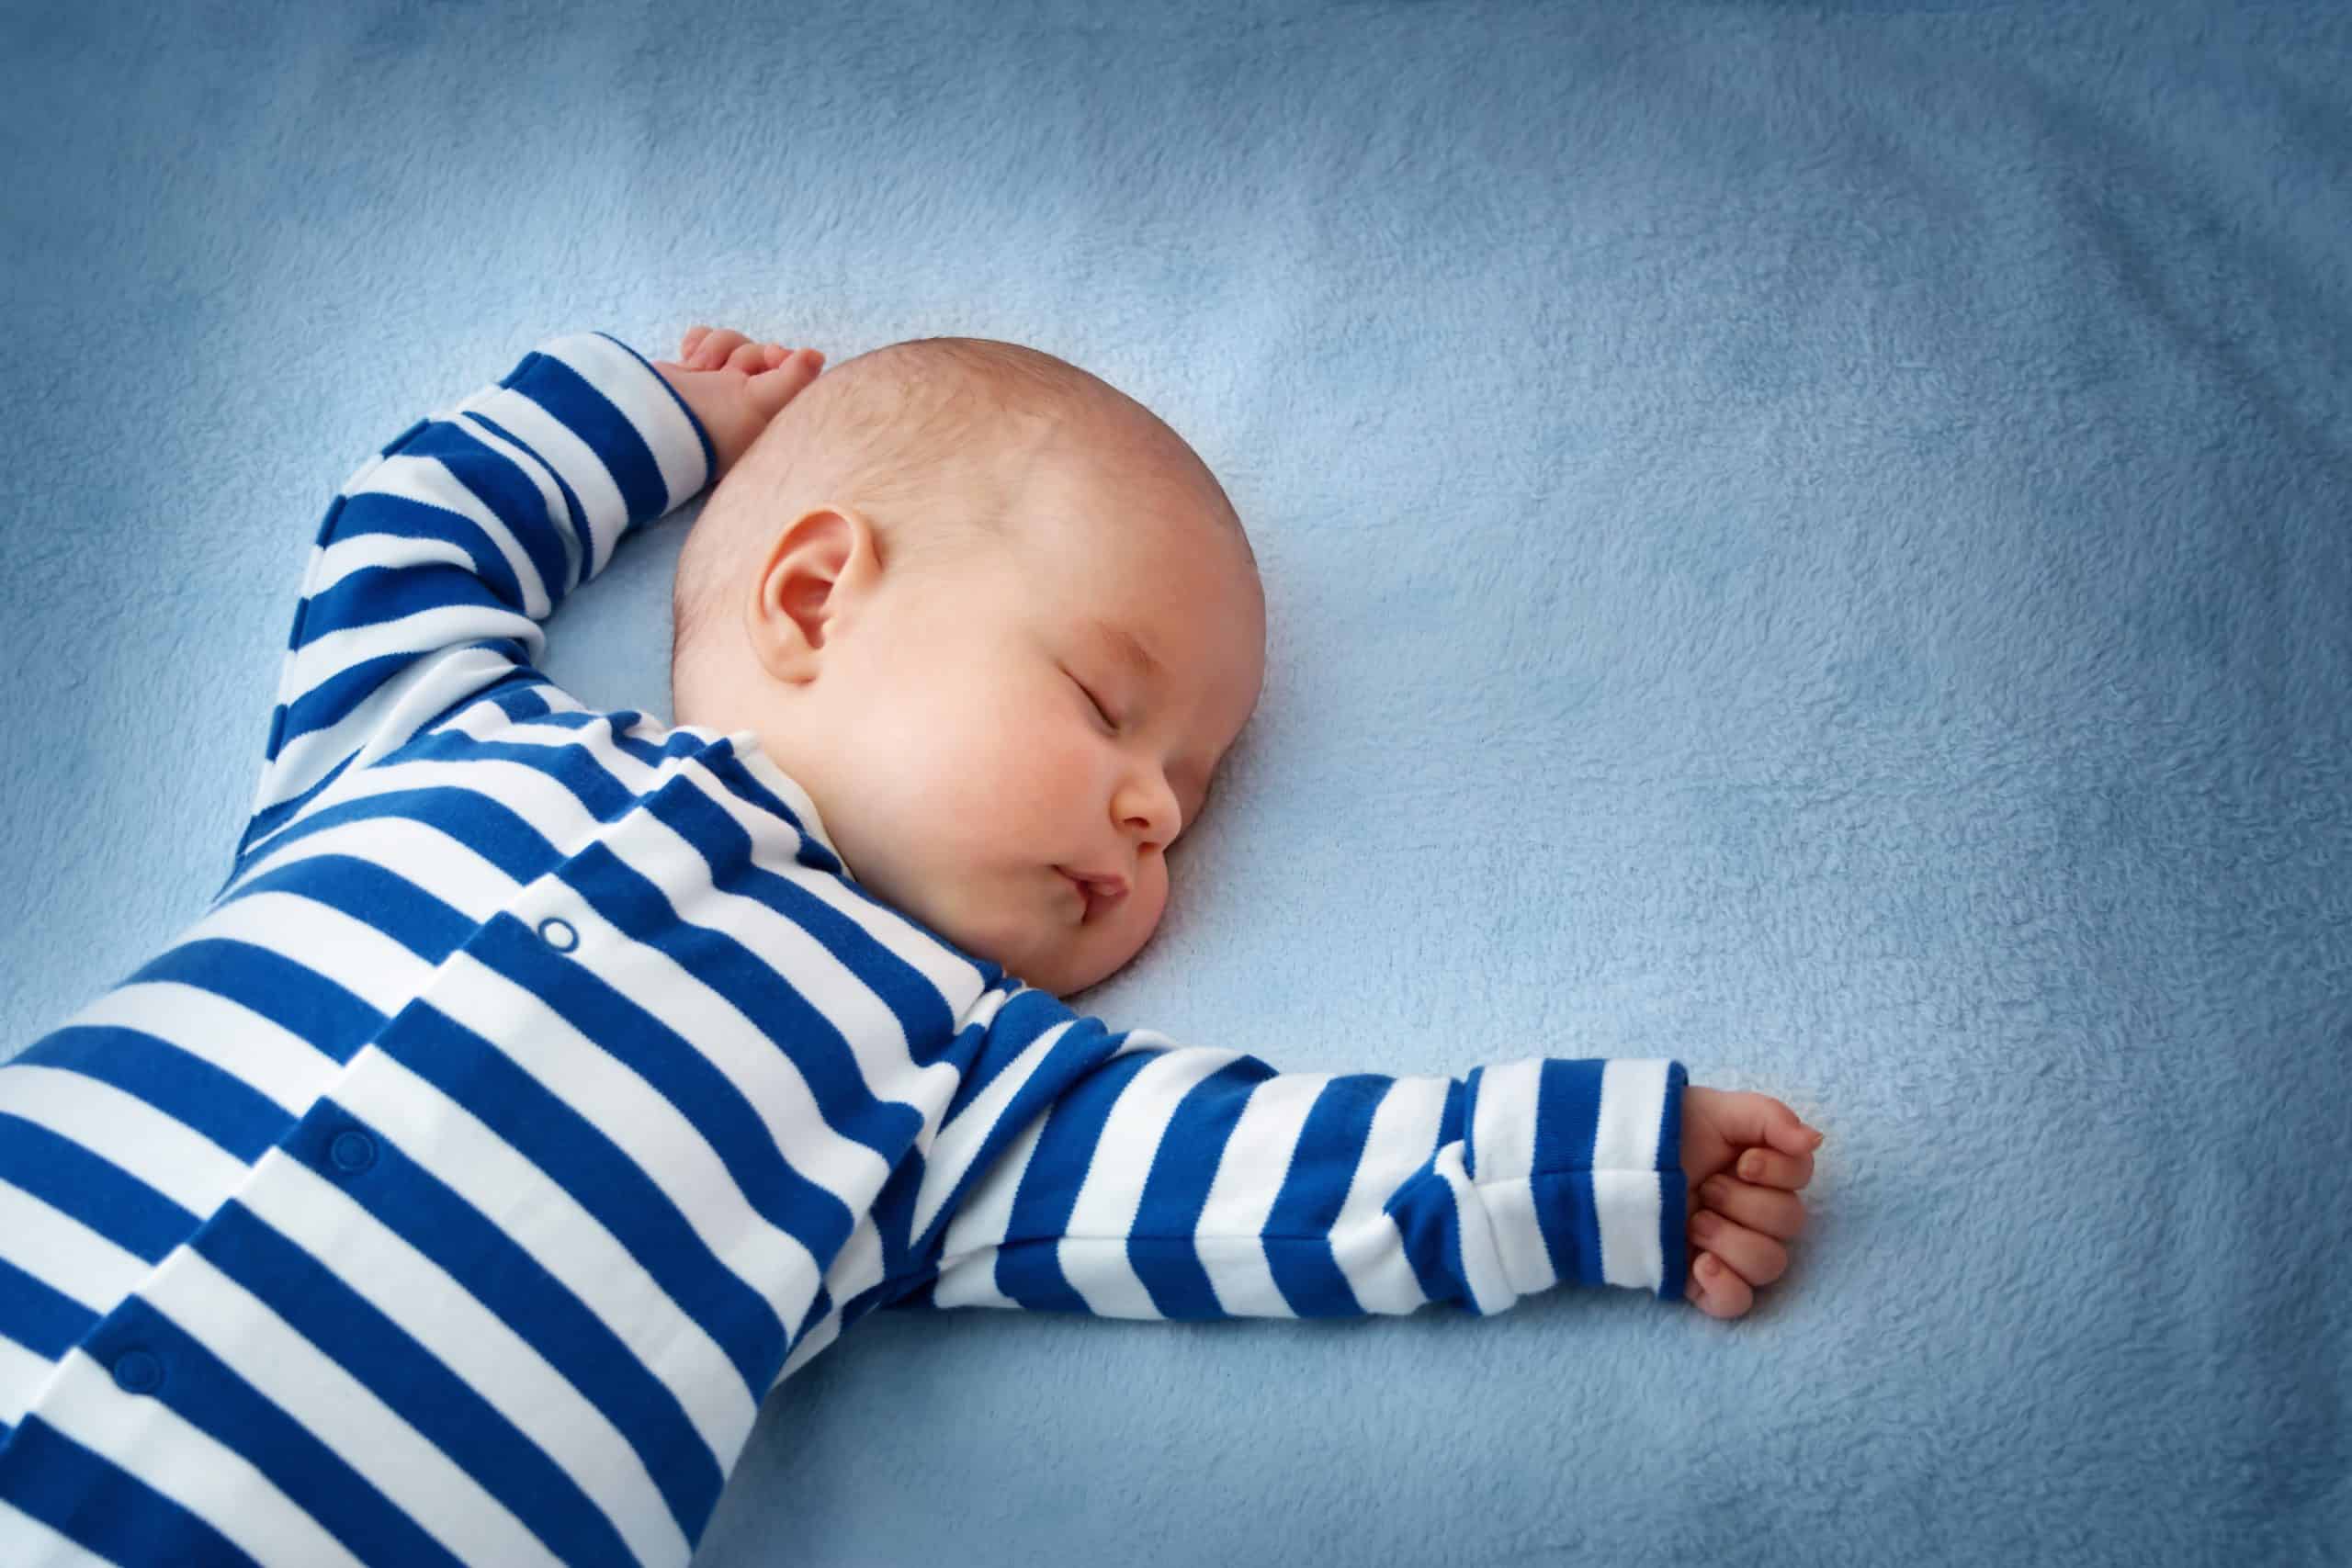 when do babies sleep through the night